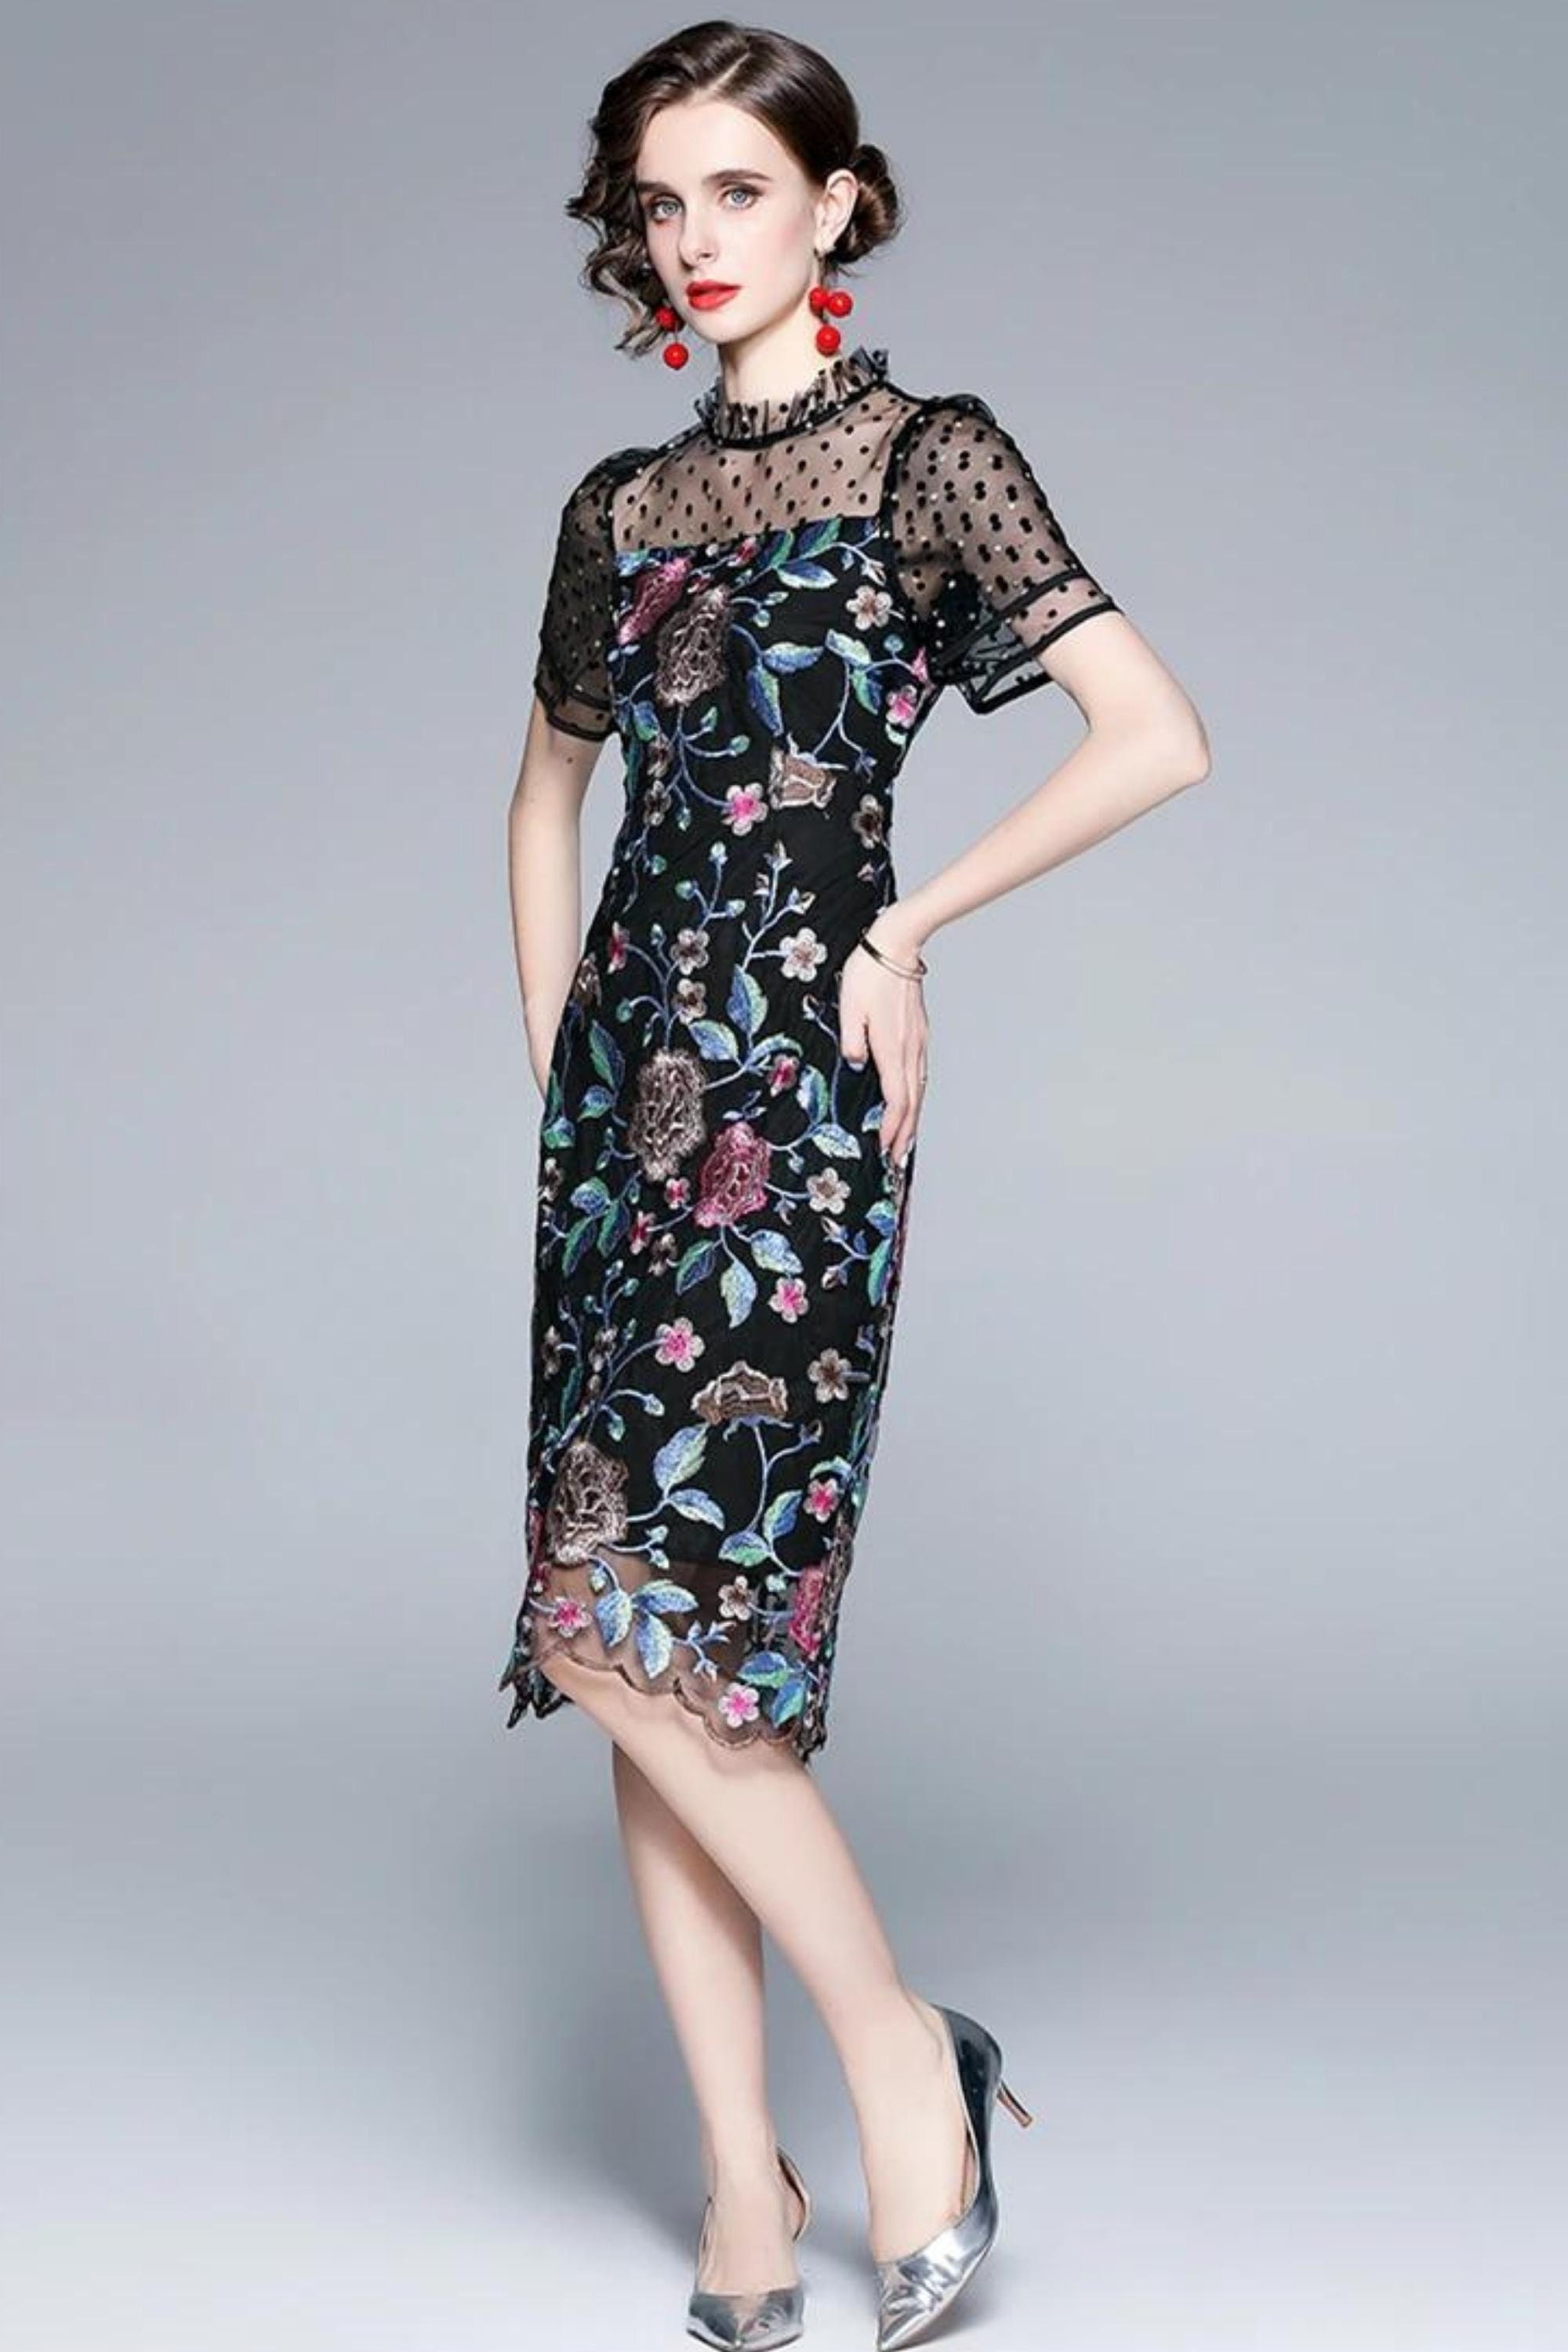 Women Luxury Embroidery Mesh Dress Festa High Quality Elegant - Etsy